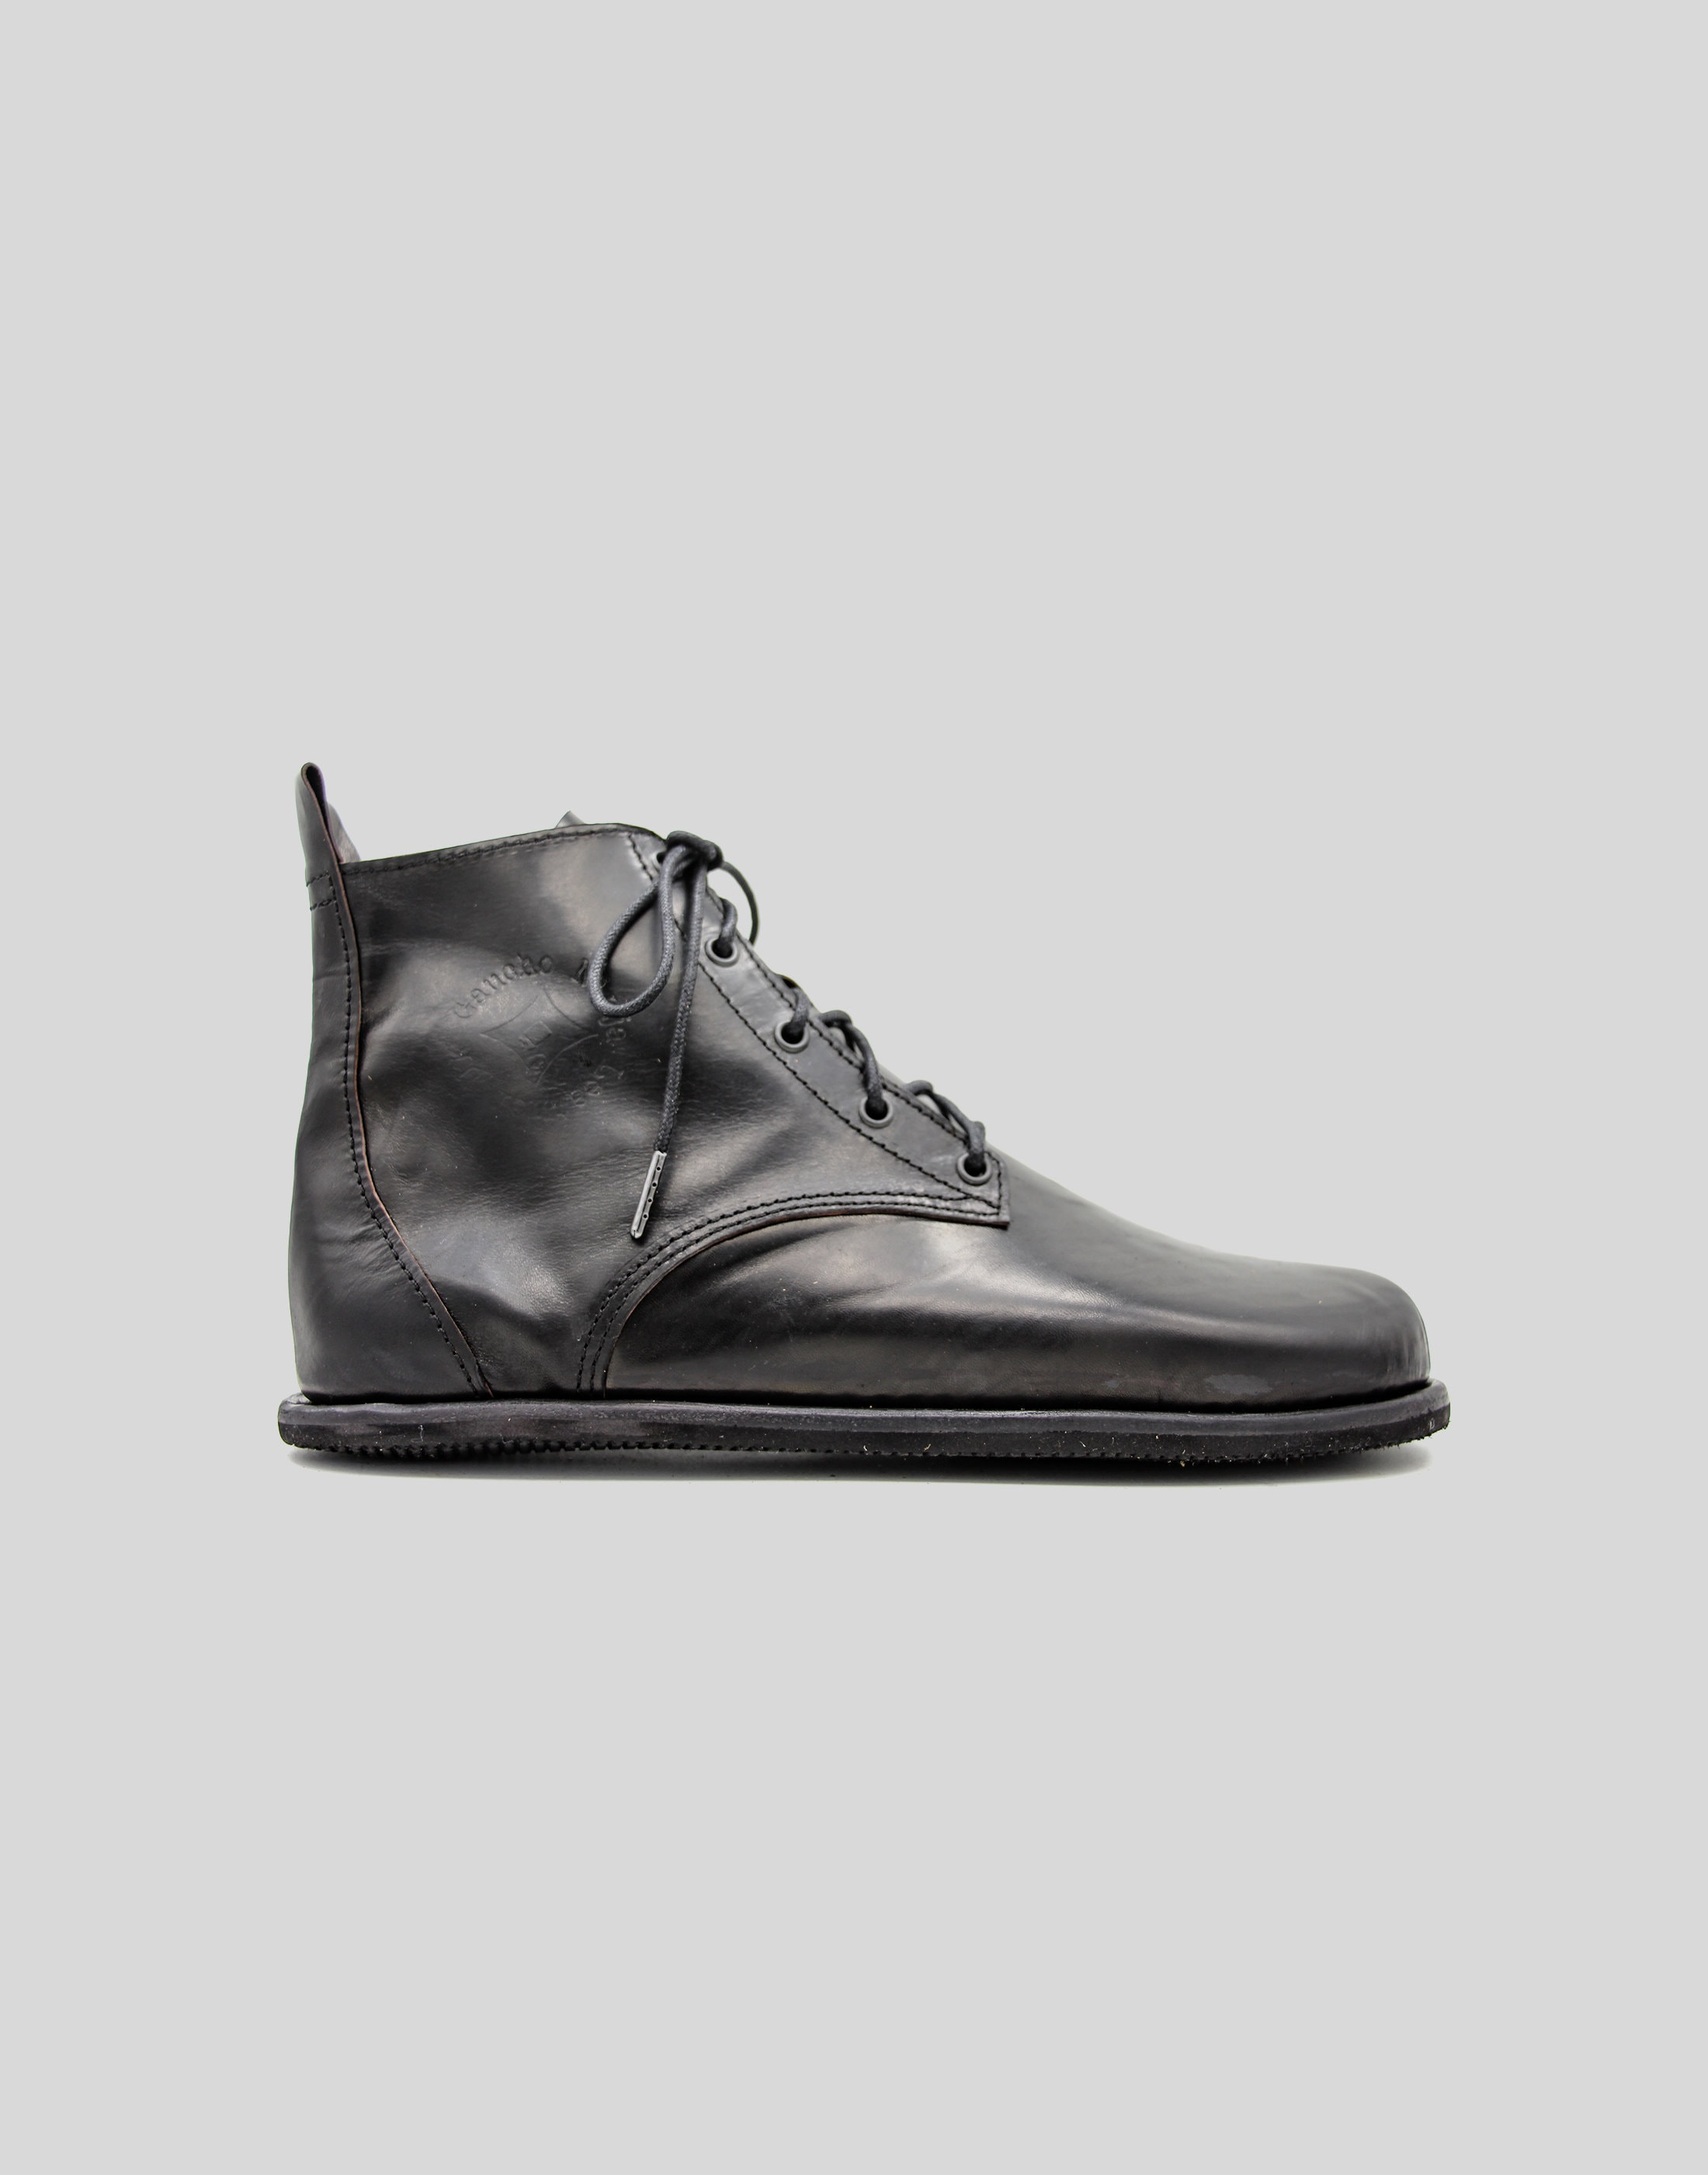 Barefoot Chukka Boots Black Leather Boots Barefoot Shoes - Etsy UK